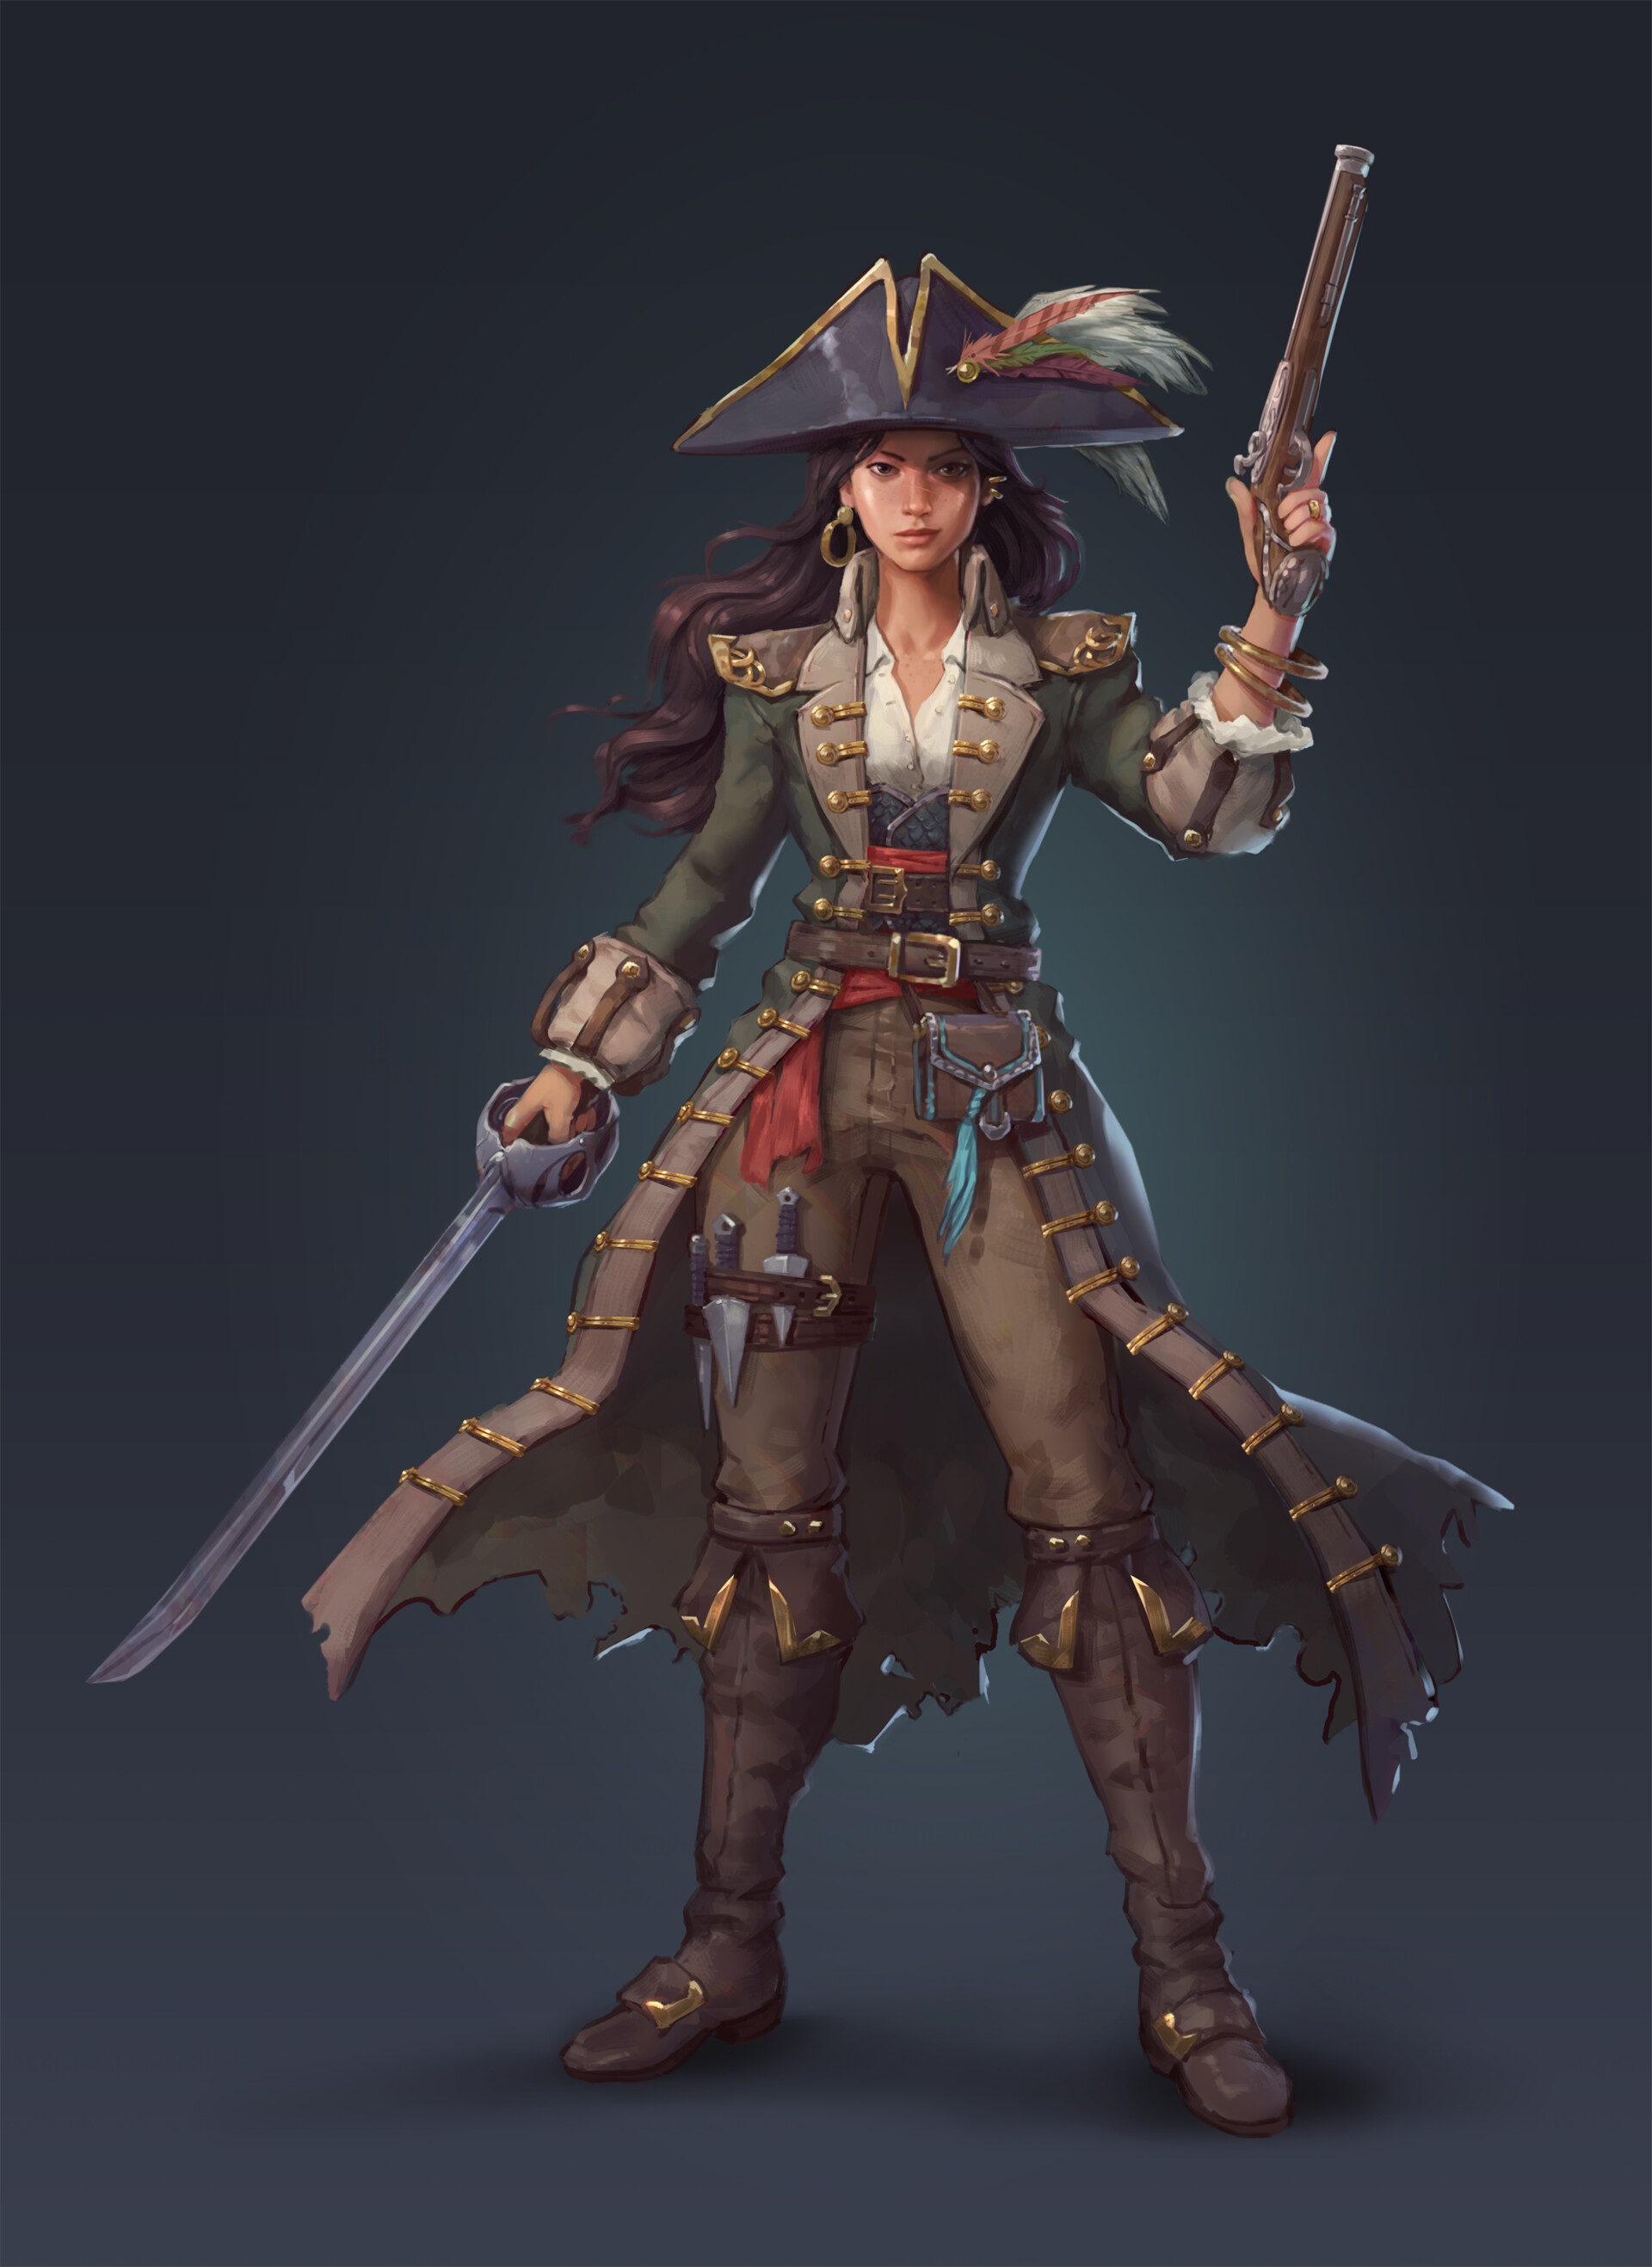 Javier Bravomalo - Female Pirate Captain - Commission